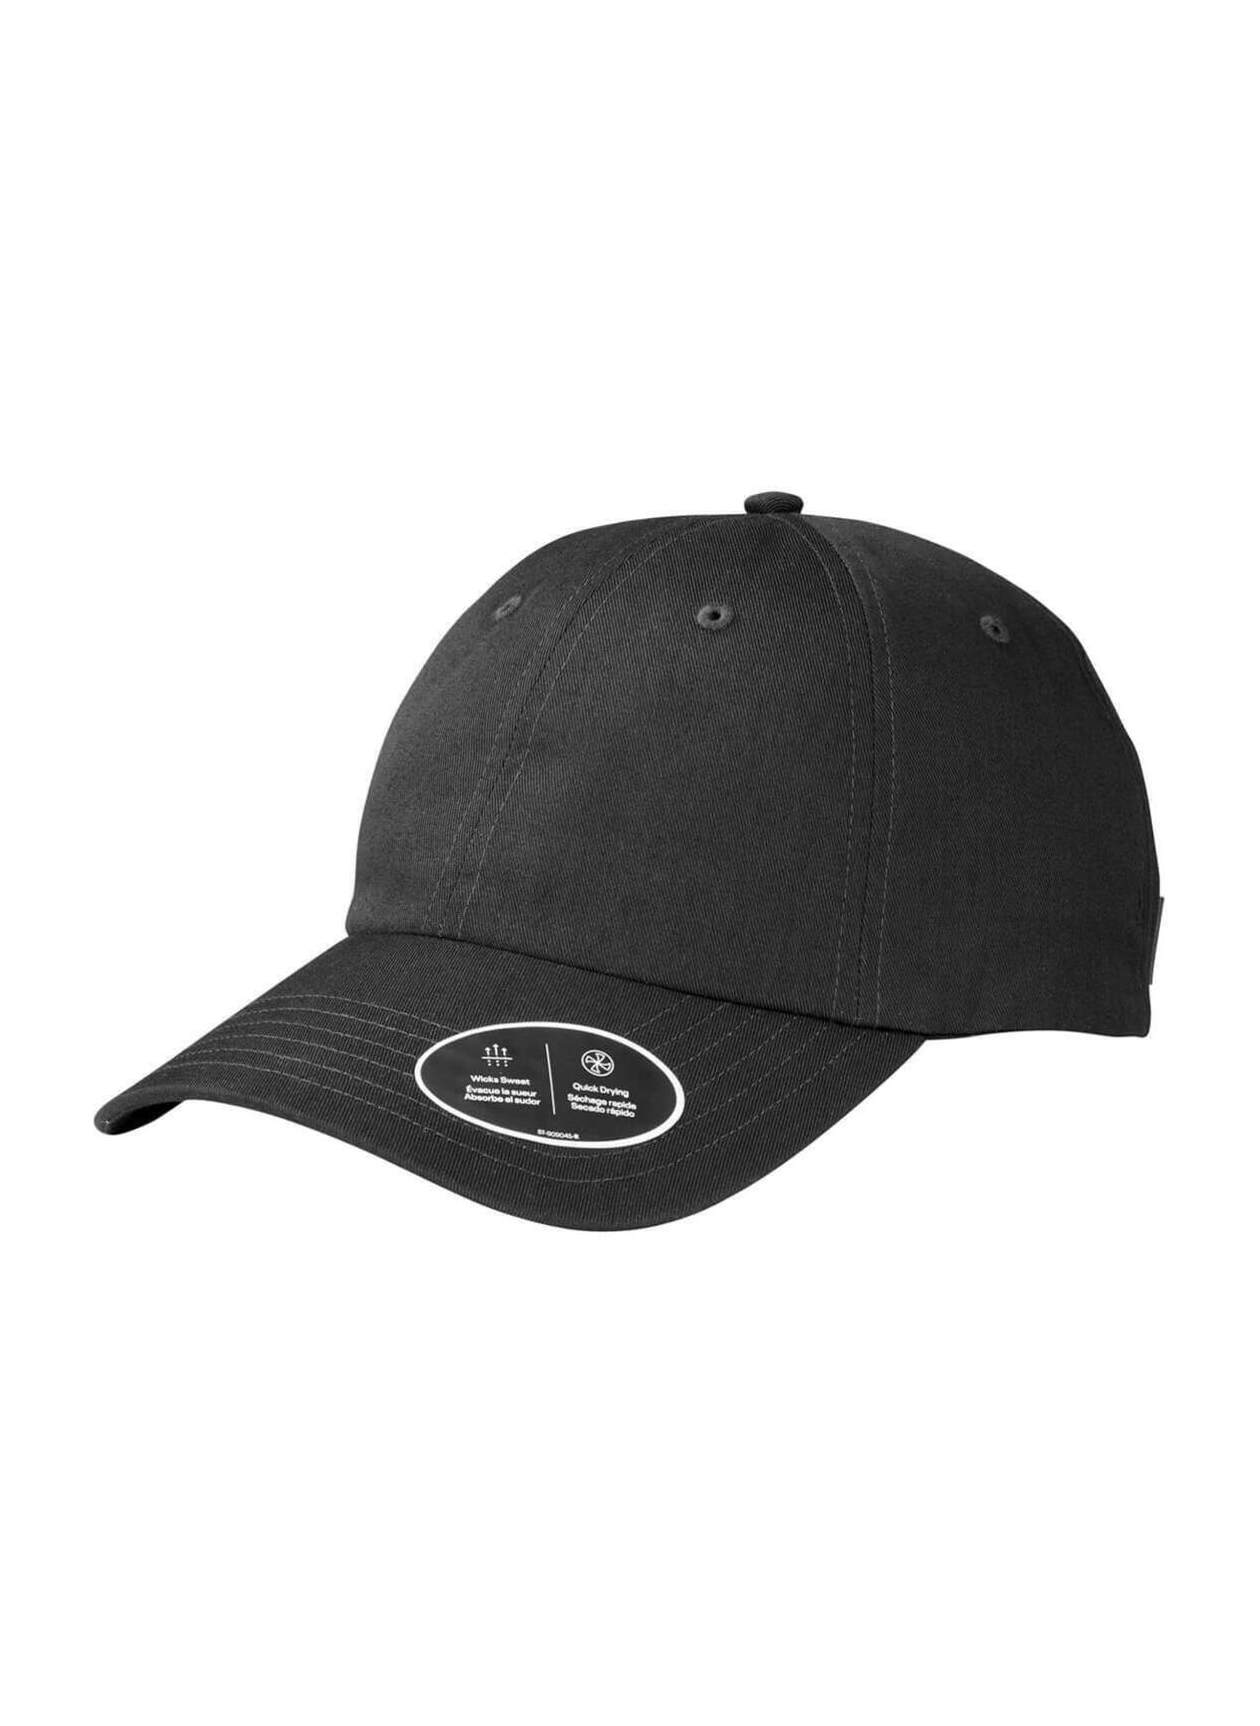 Under Armour Black Team Chino Hat |  Under Armour黑色鴨舌帽